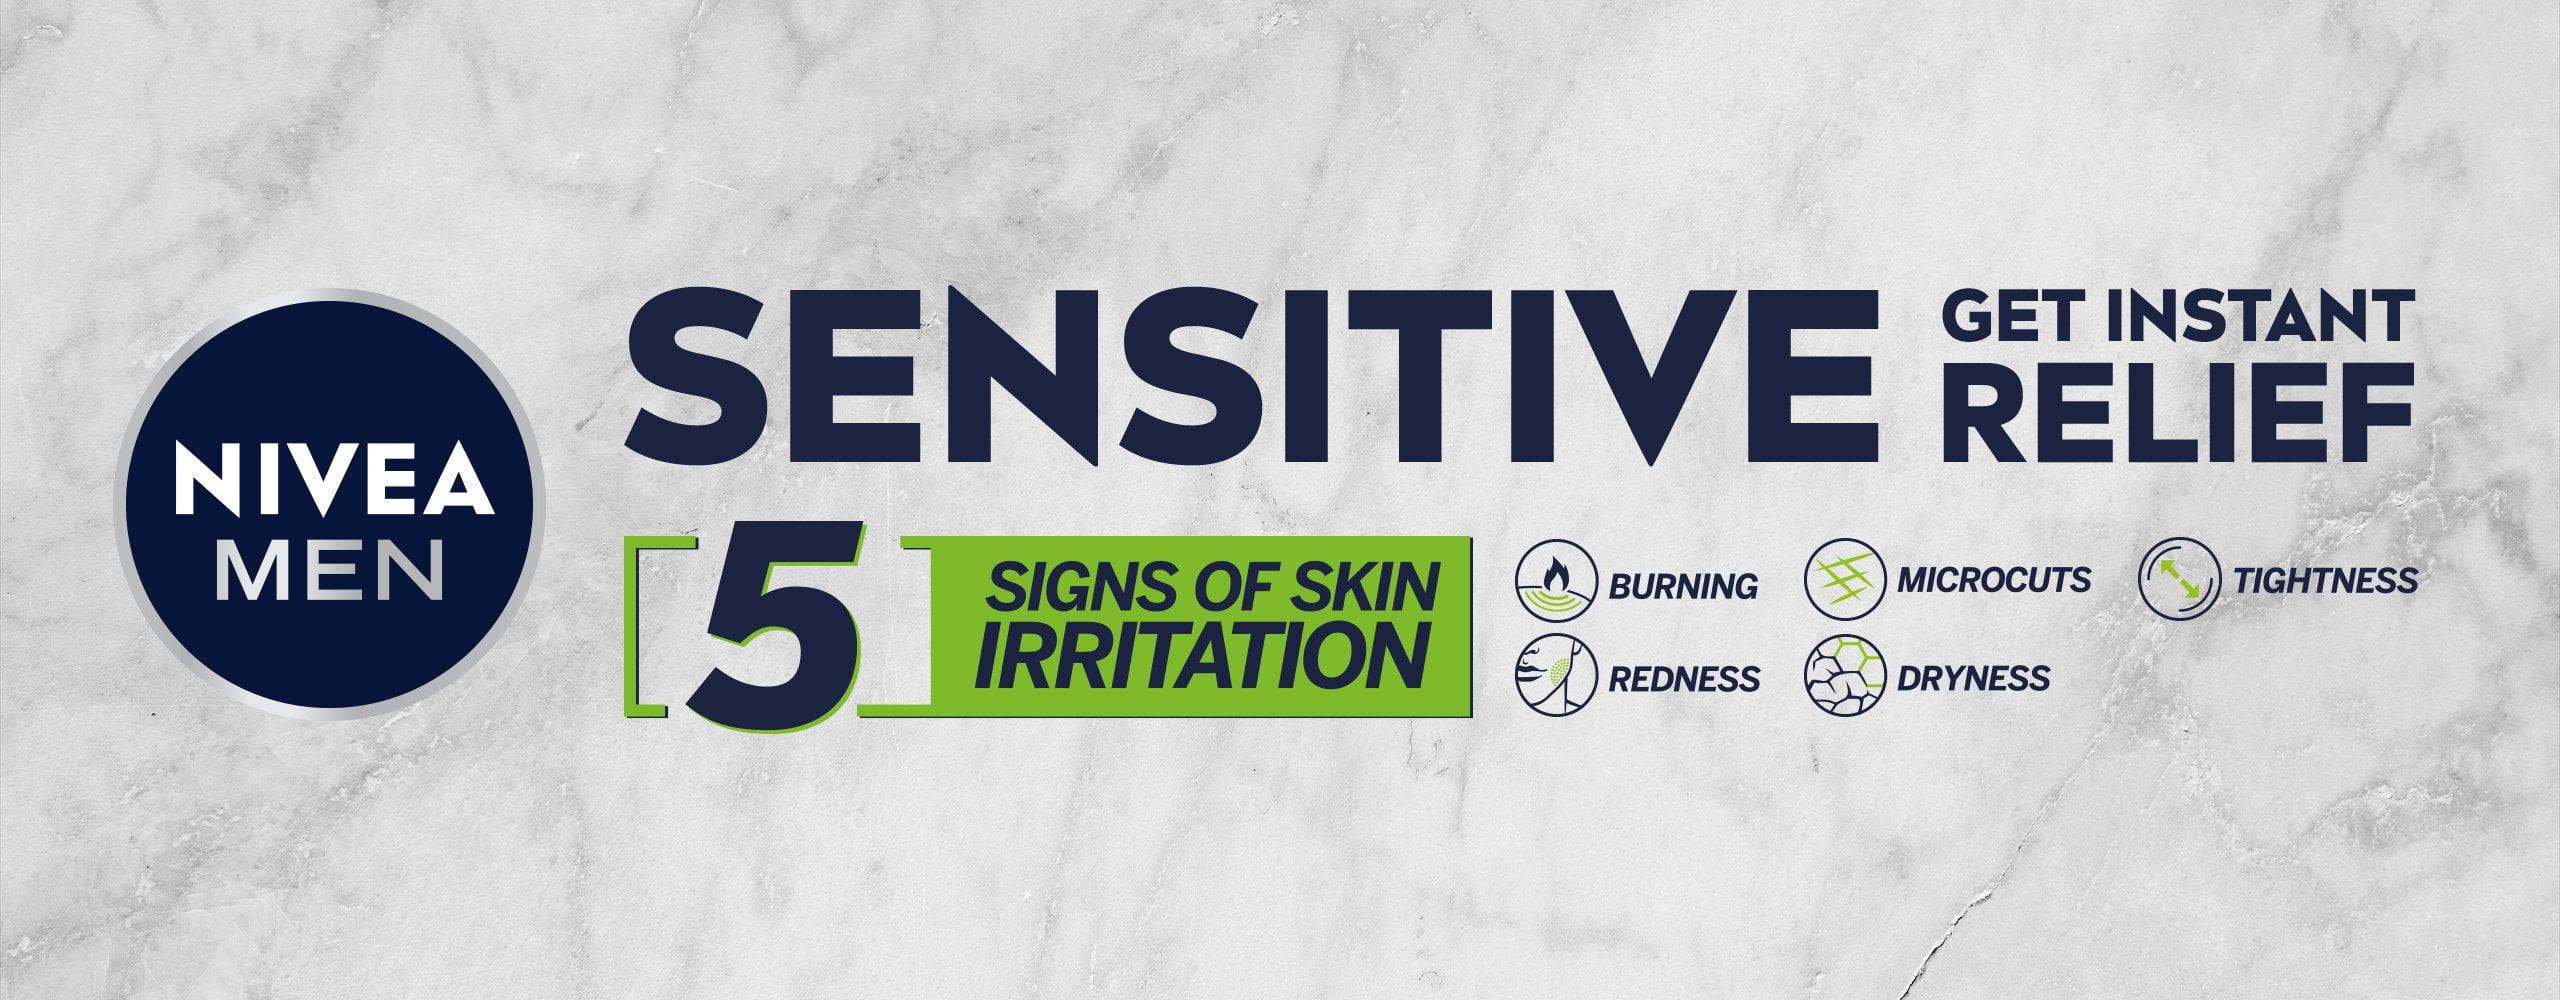 Sensitive 5 signs of irritation